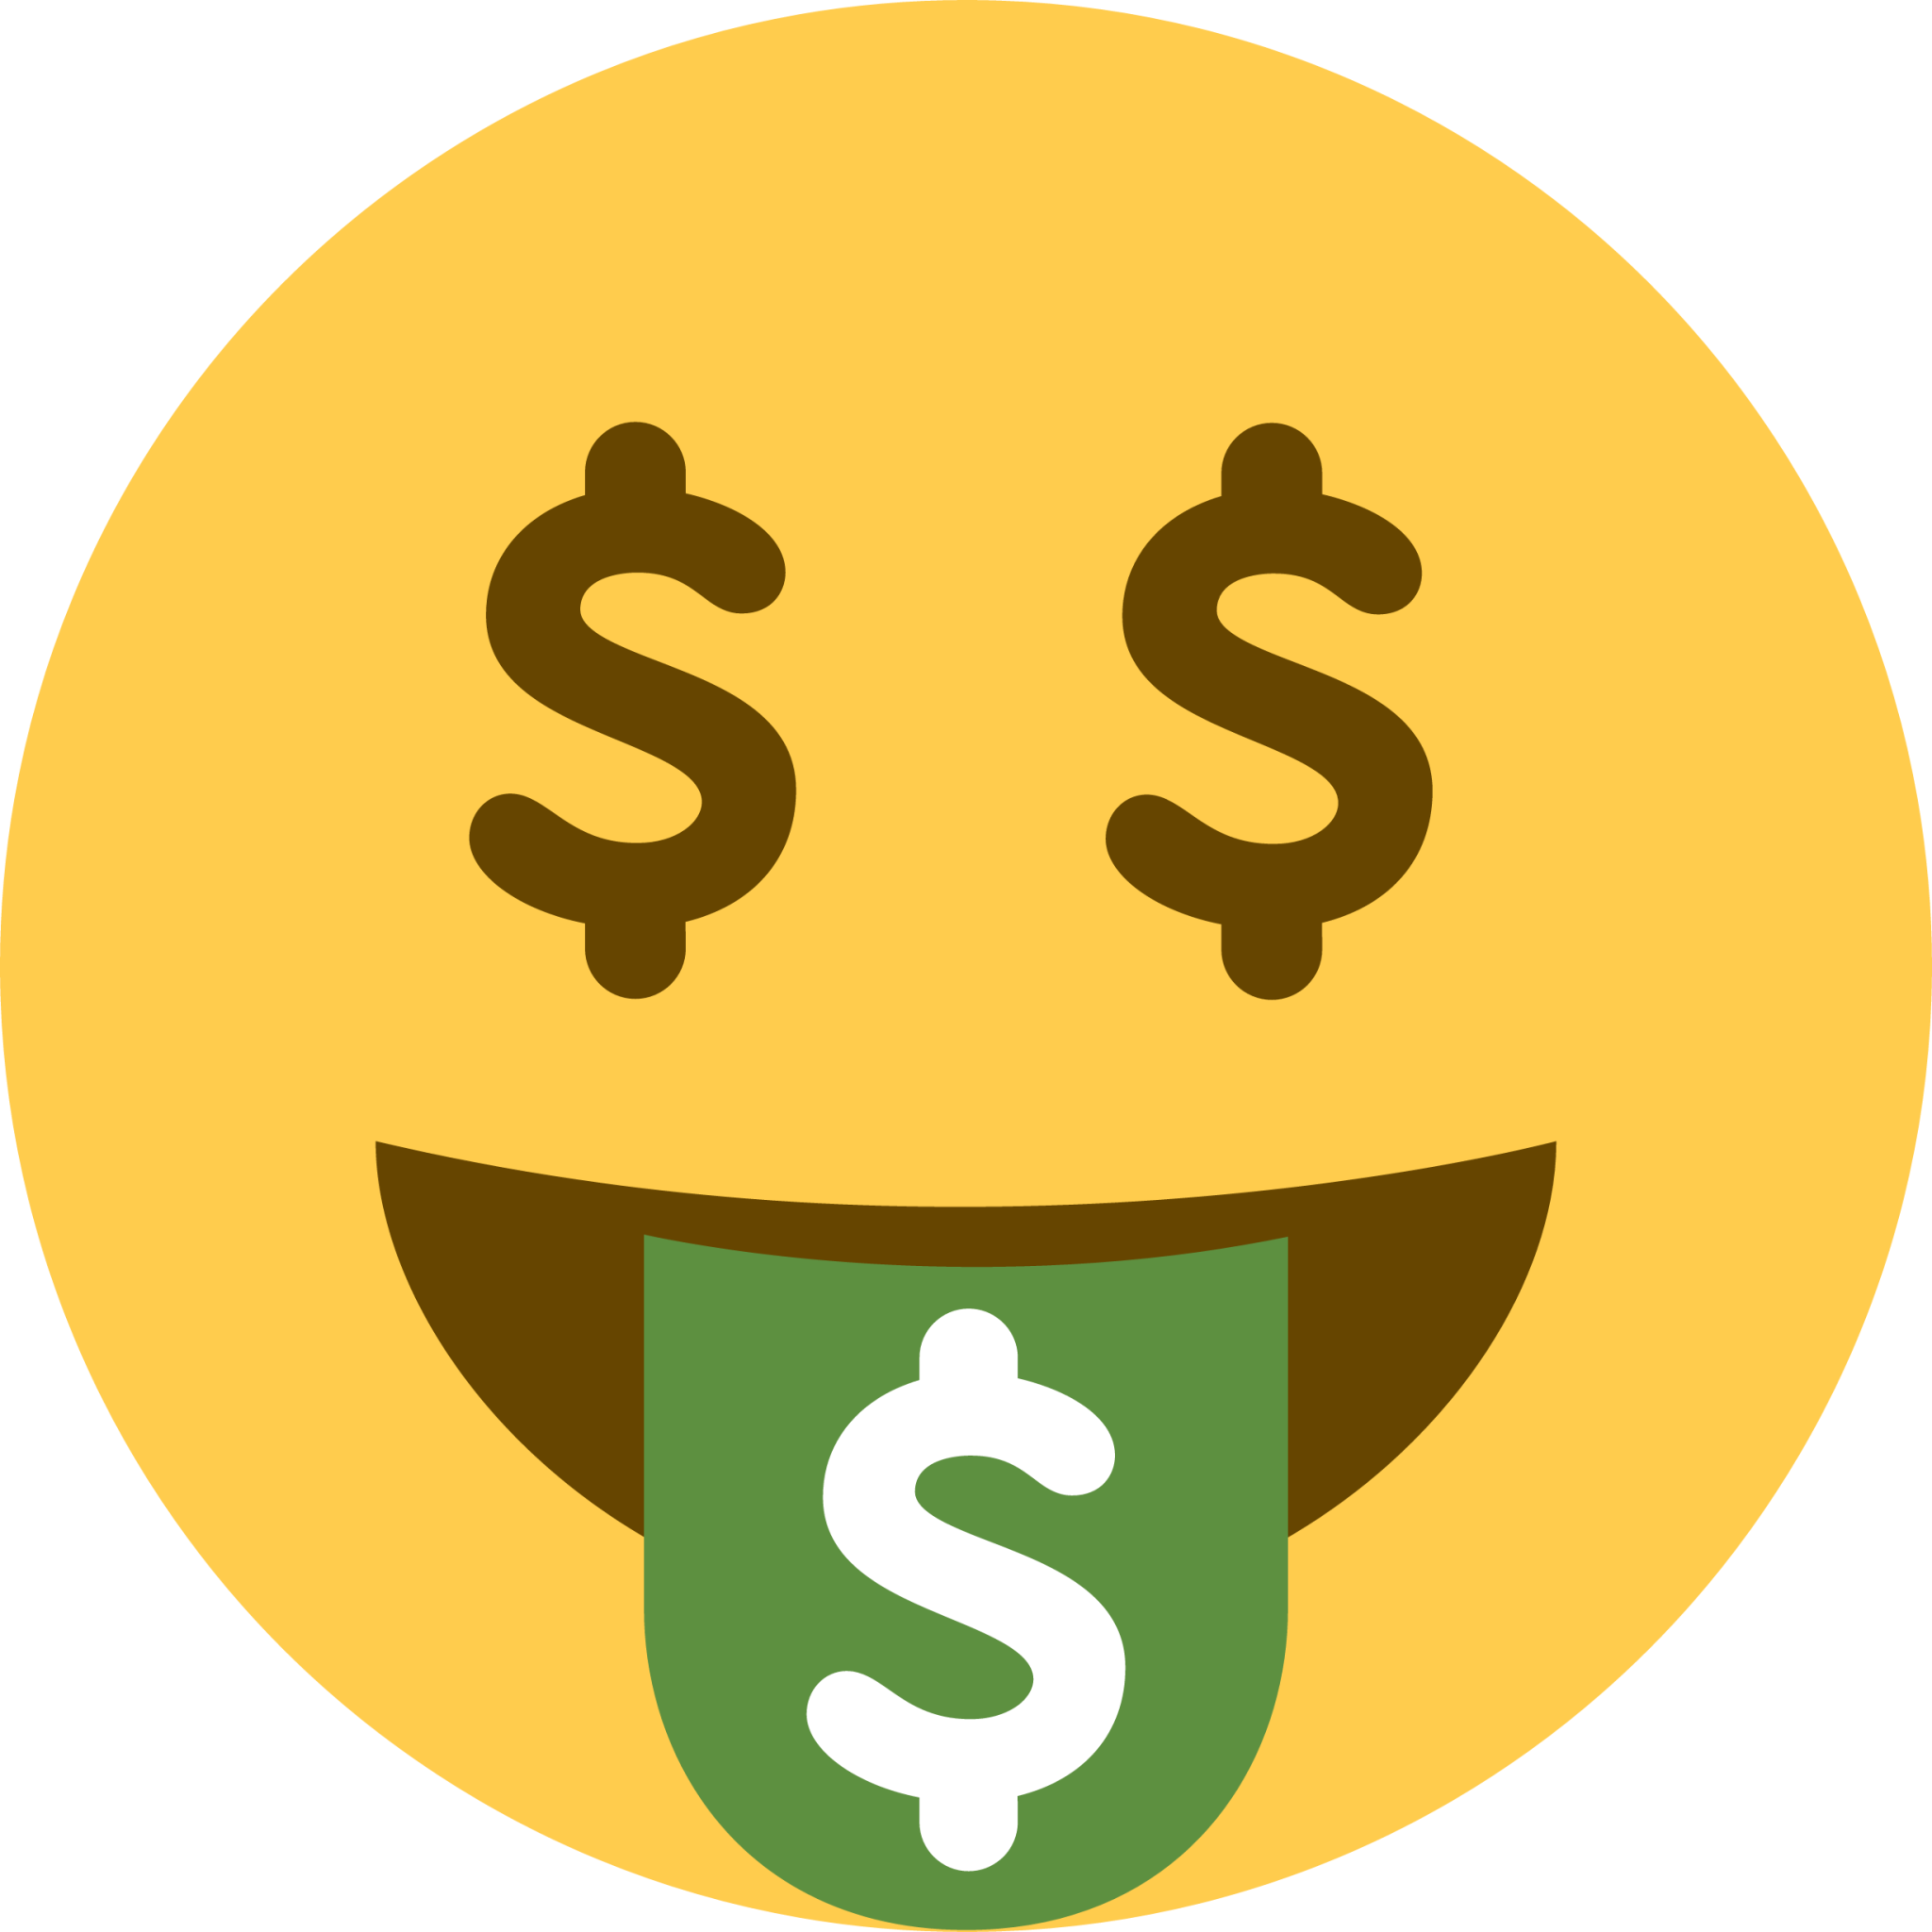 star and money emoji